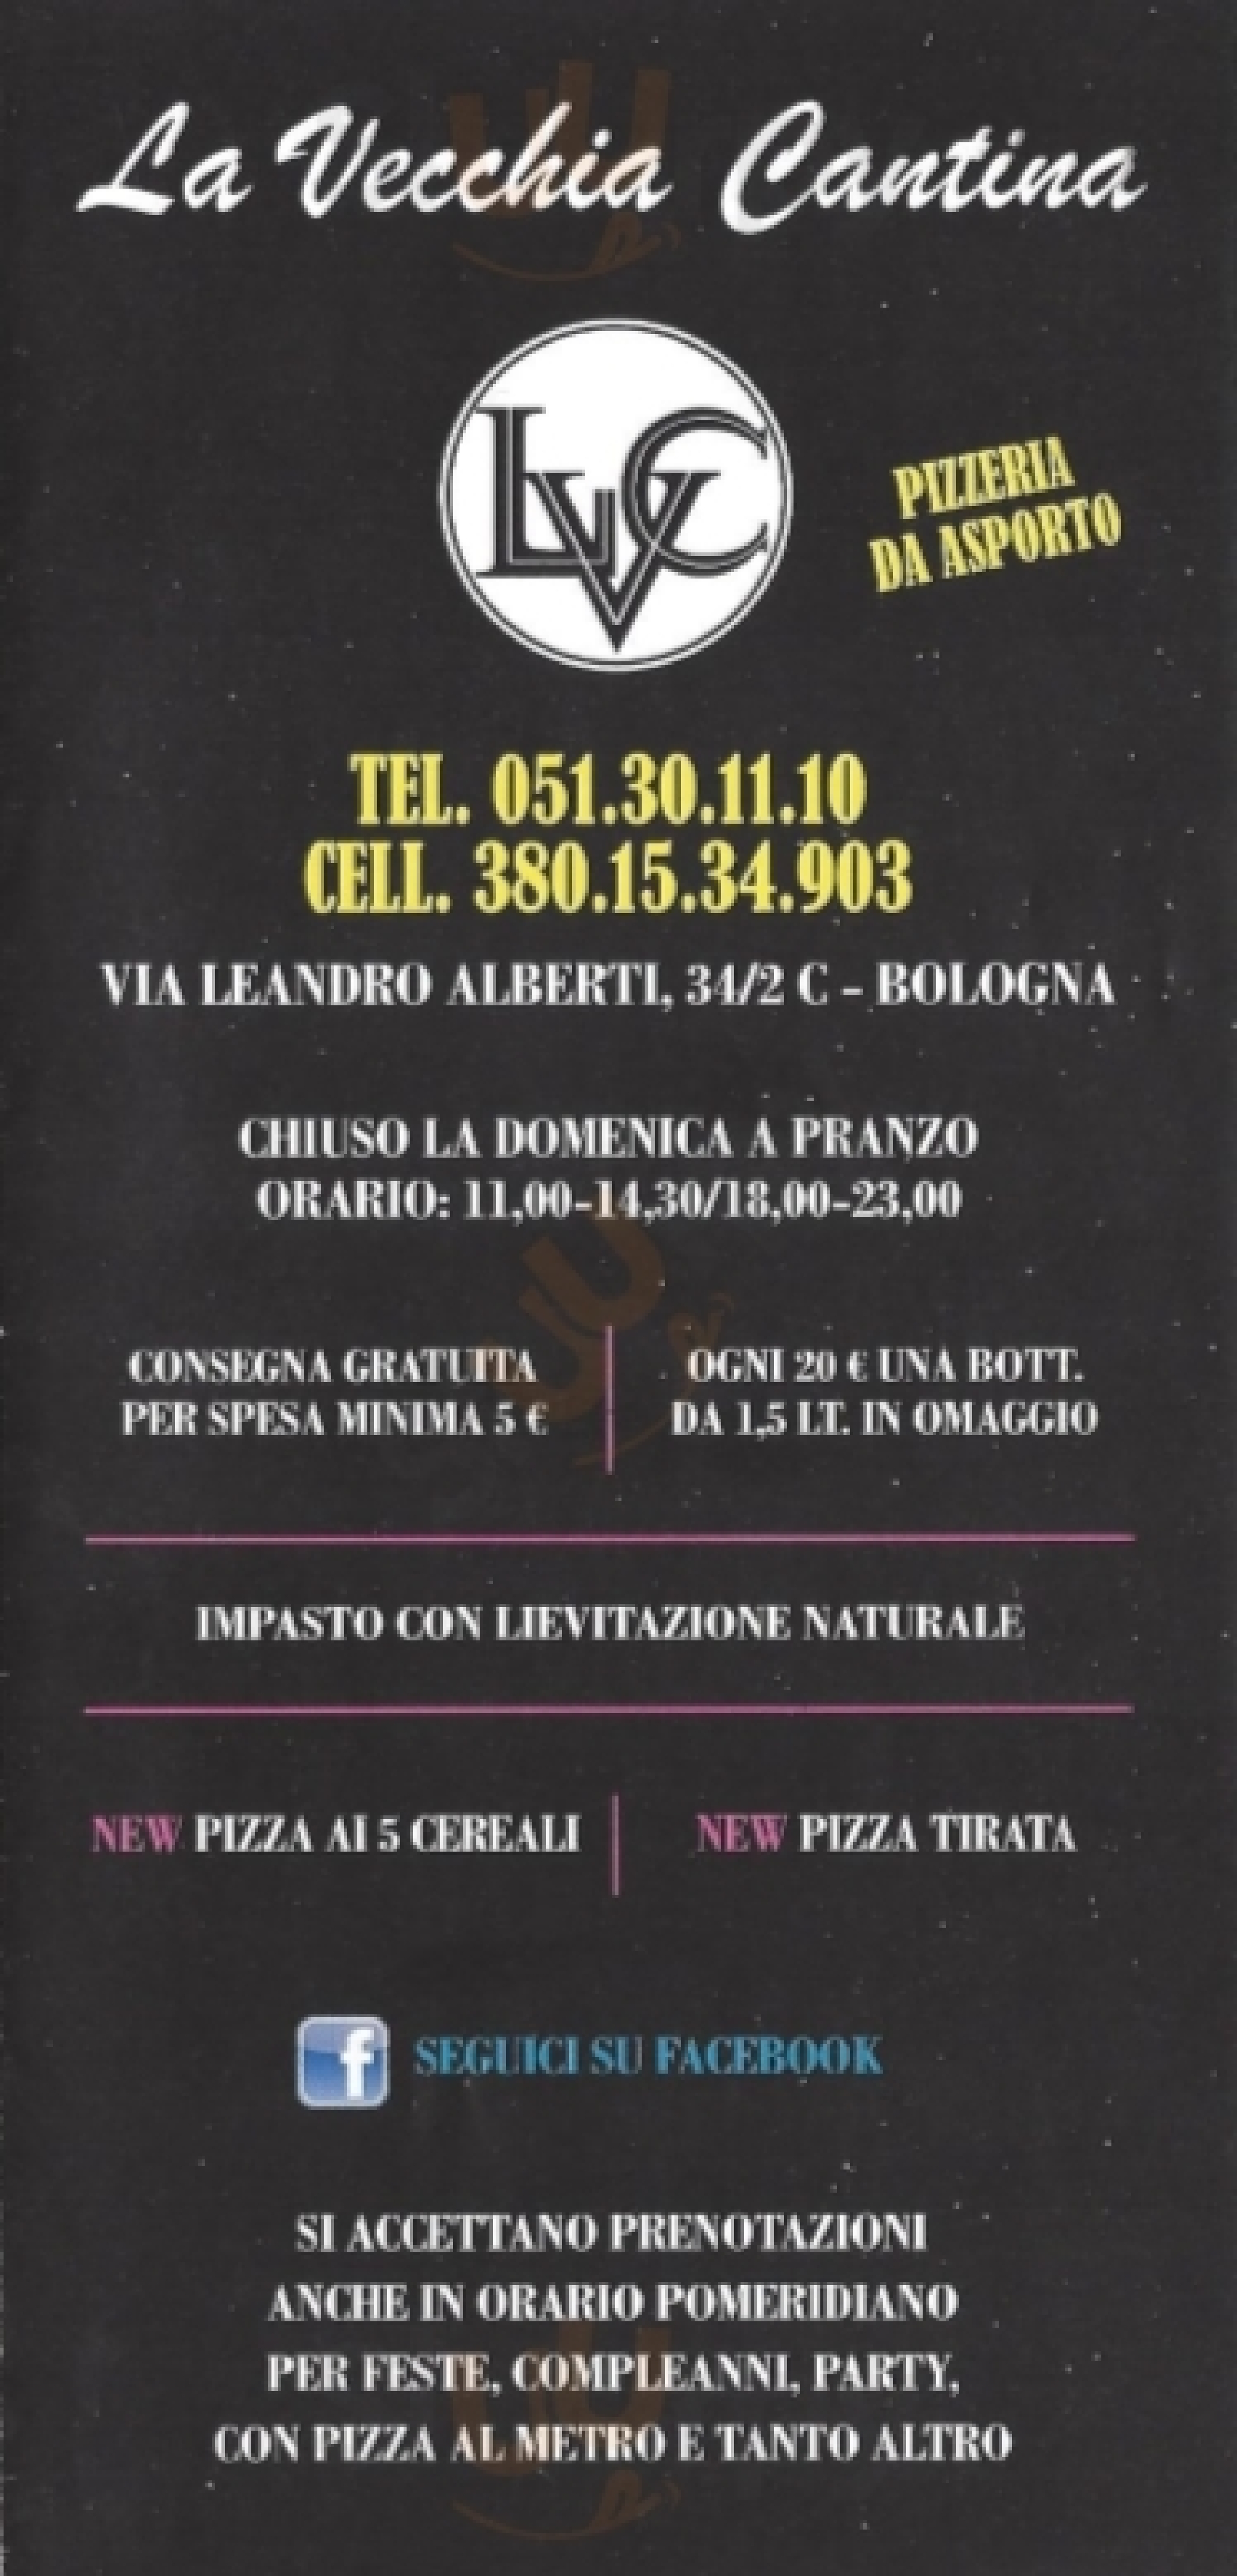 La Vecchia Cantina Bologna menù 1 pagina